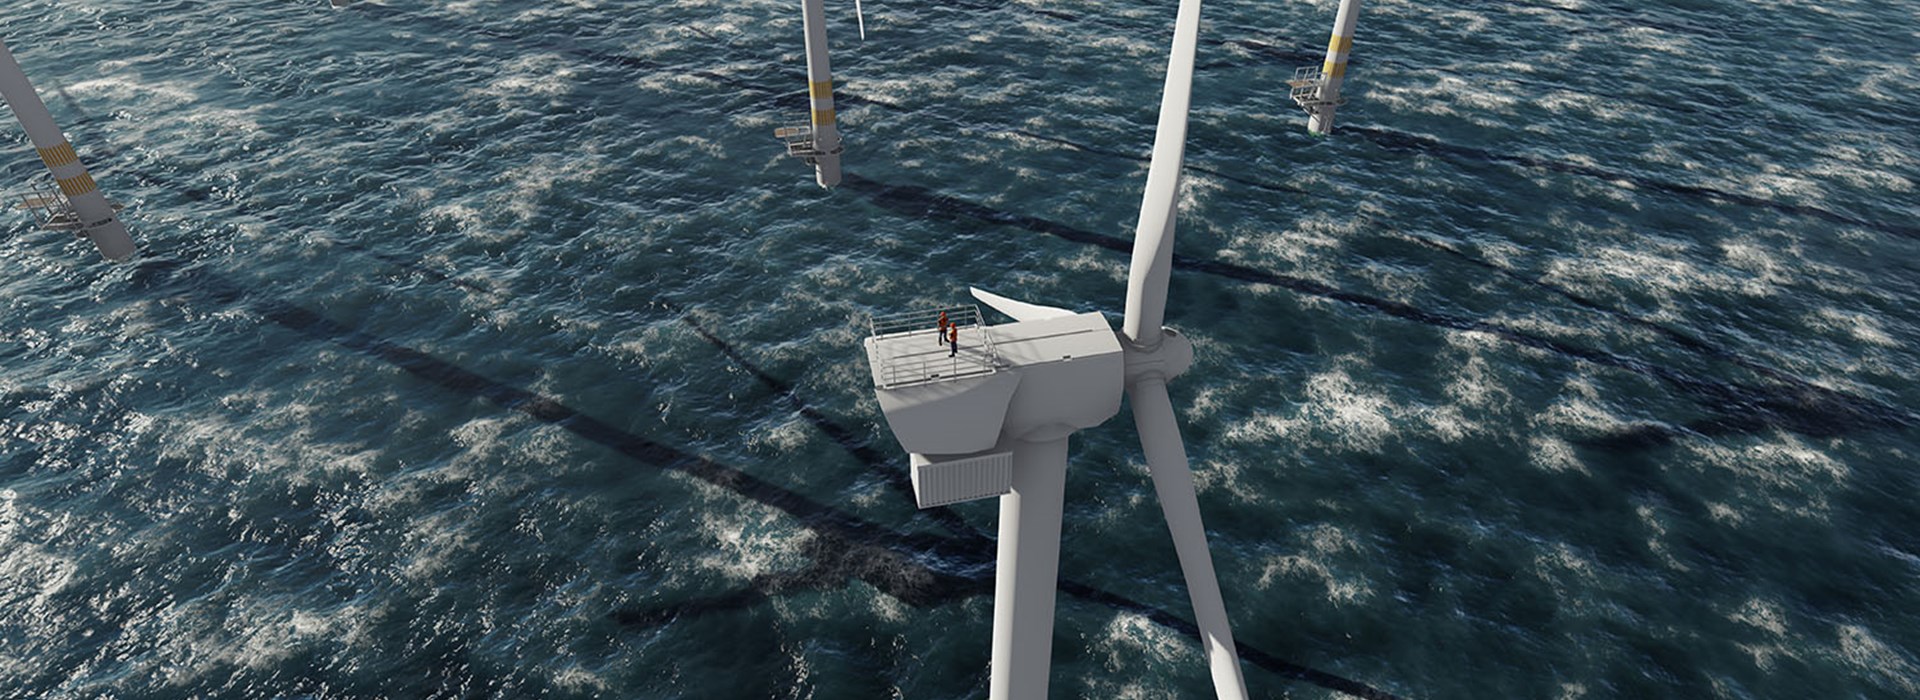 Offshore Wind Farm Web